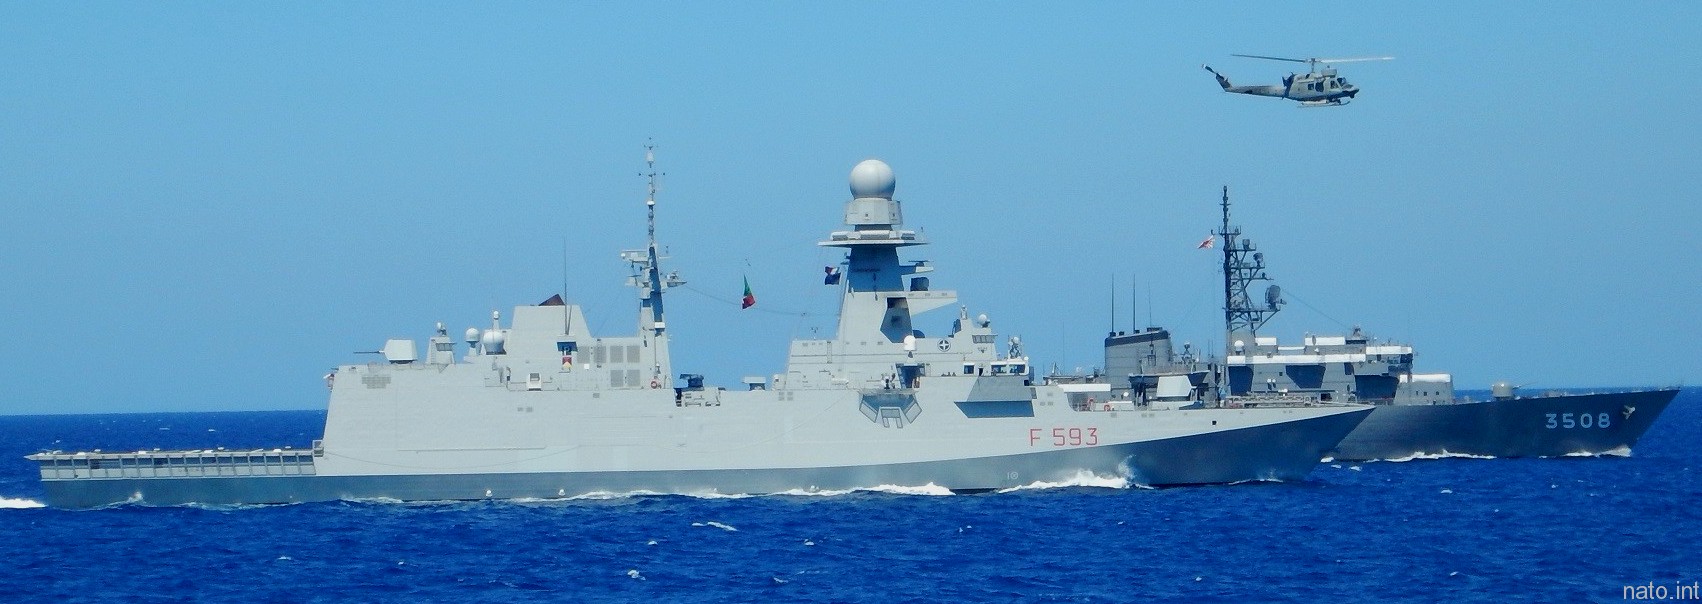 f-593 carabiniere its nave bergamini fremm class guided missile frigate italian navy marina militare 31